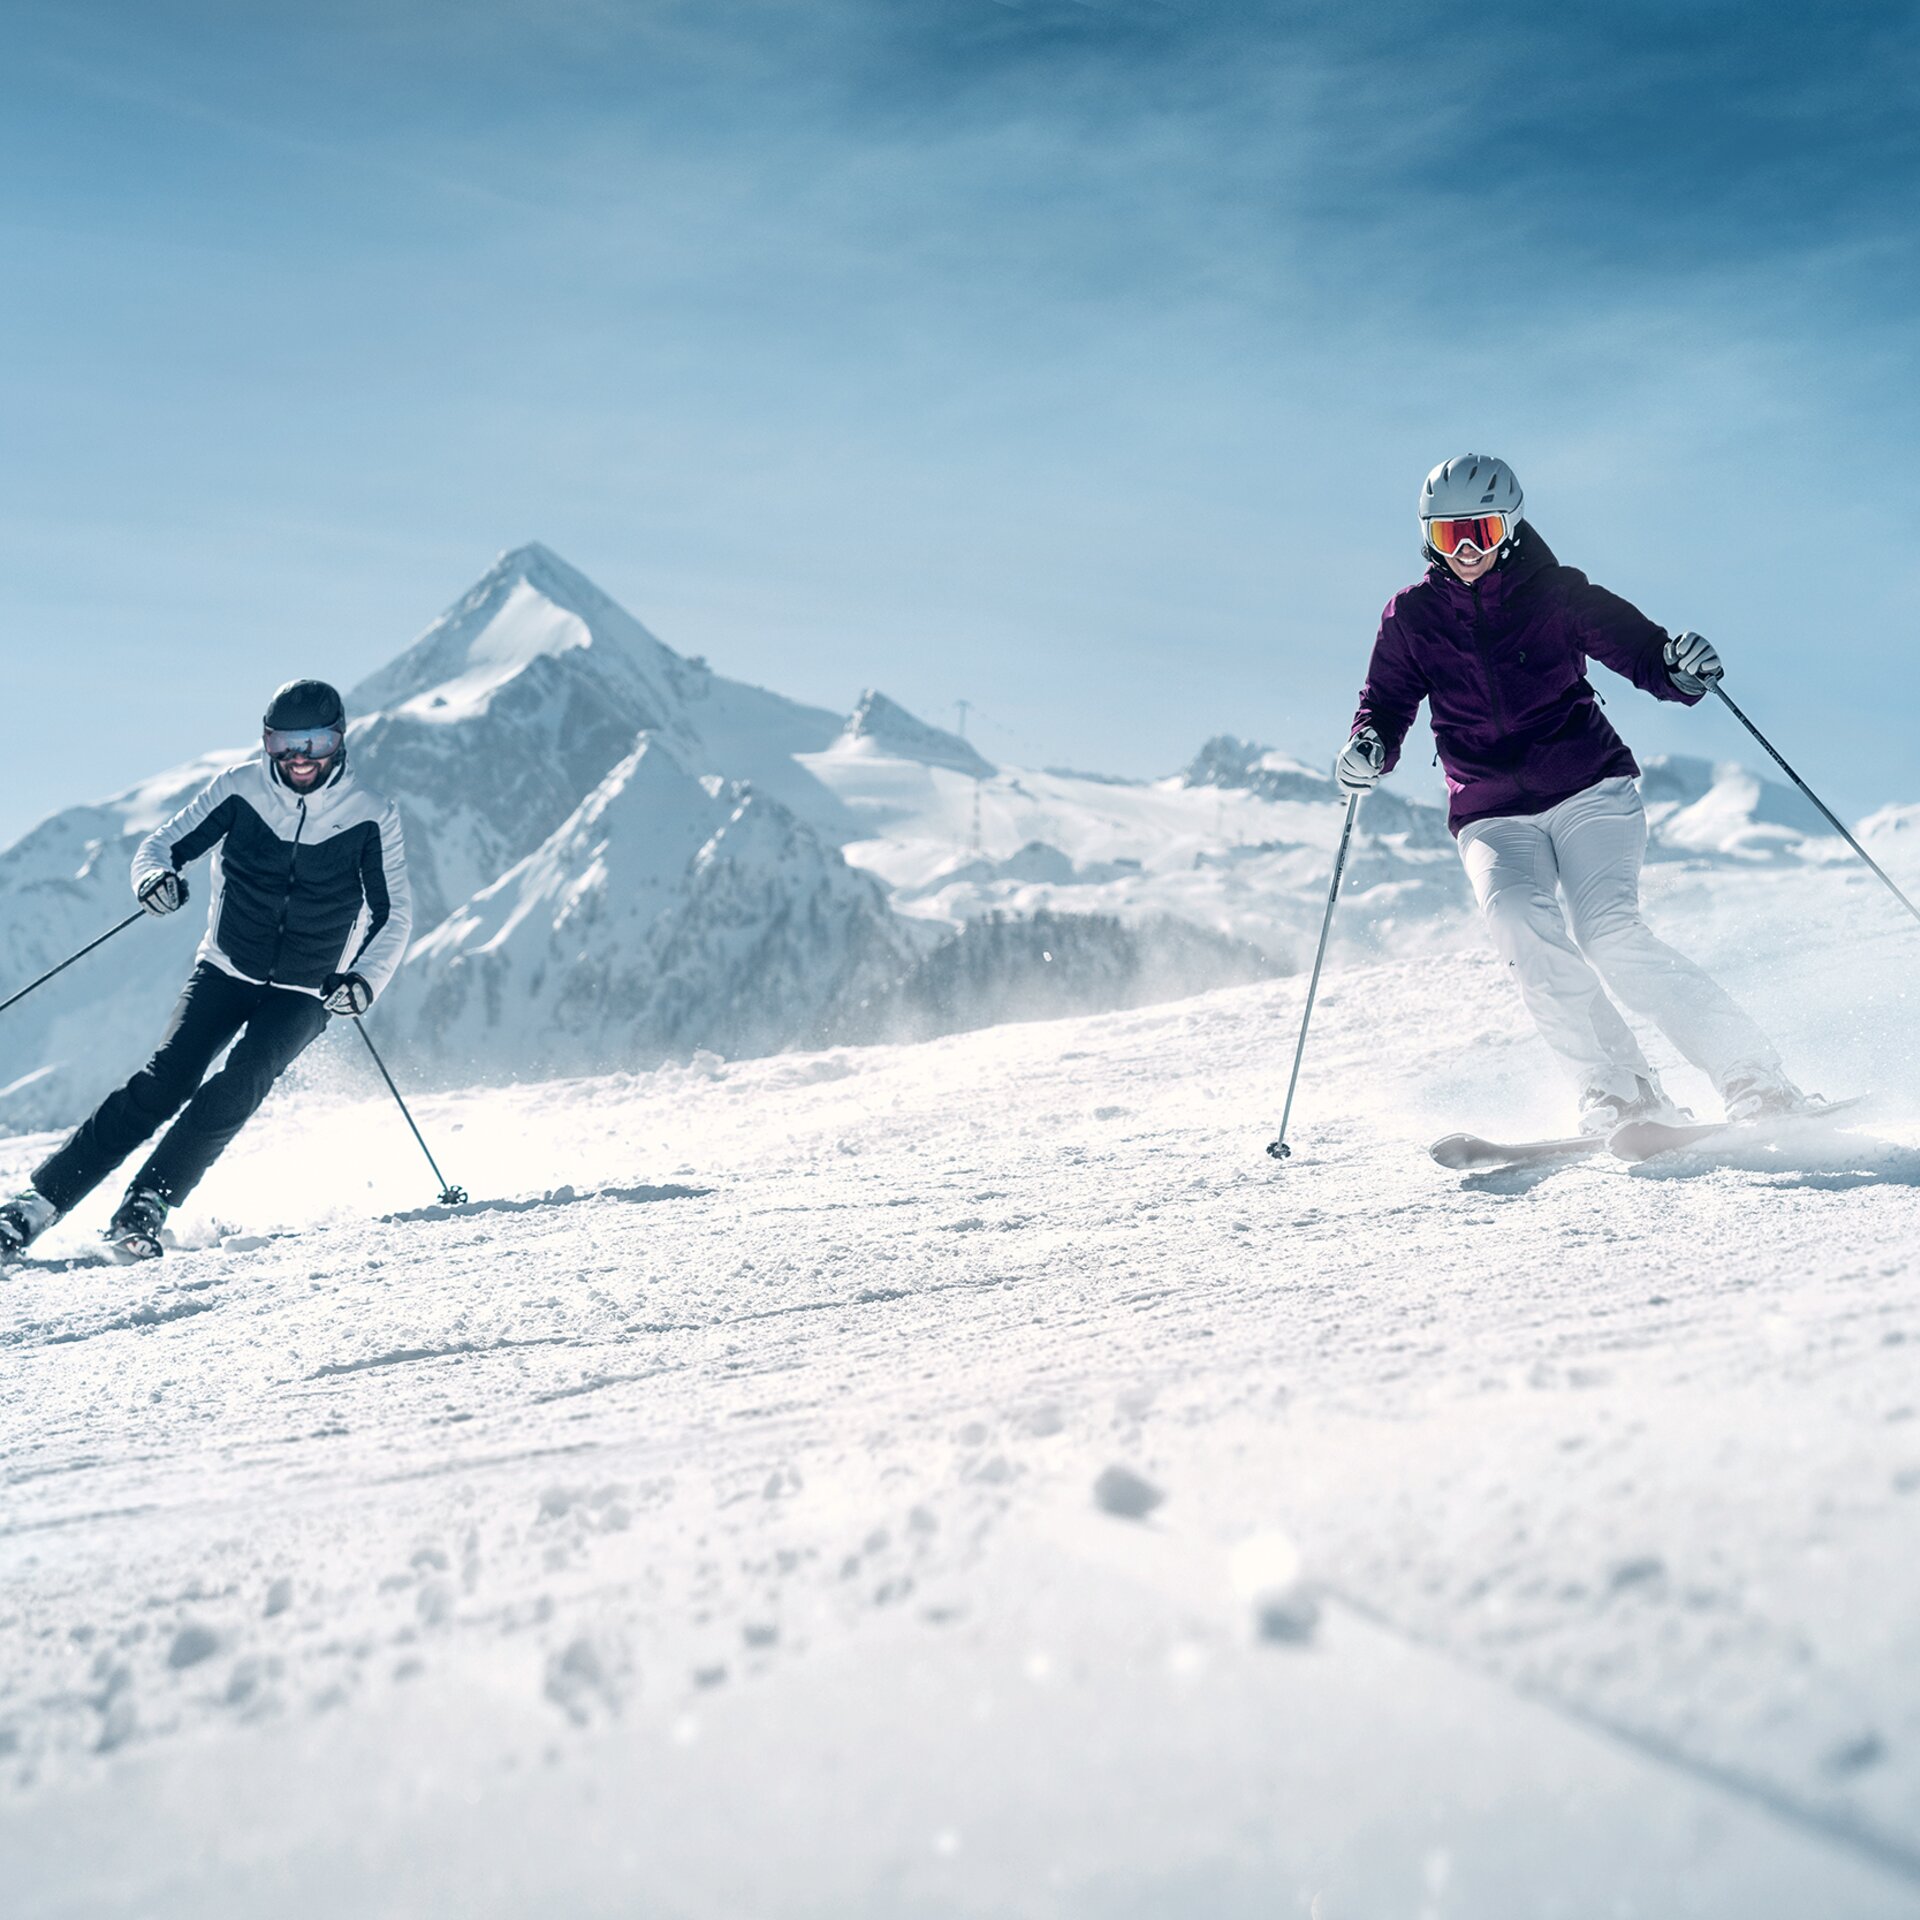 Maiskogel skiing